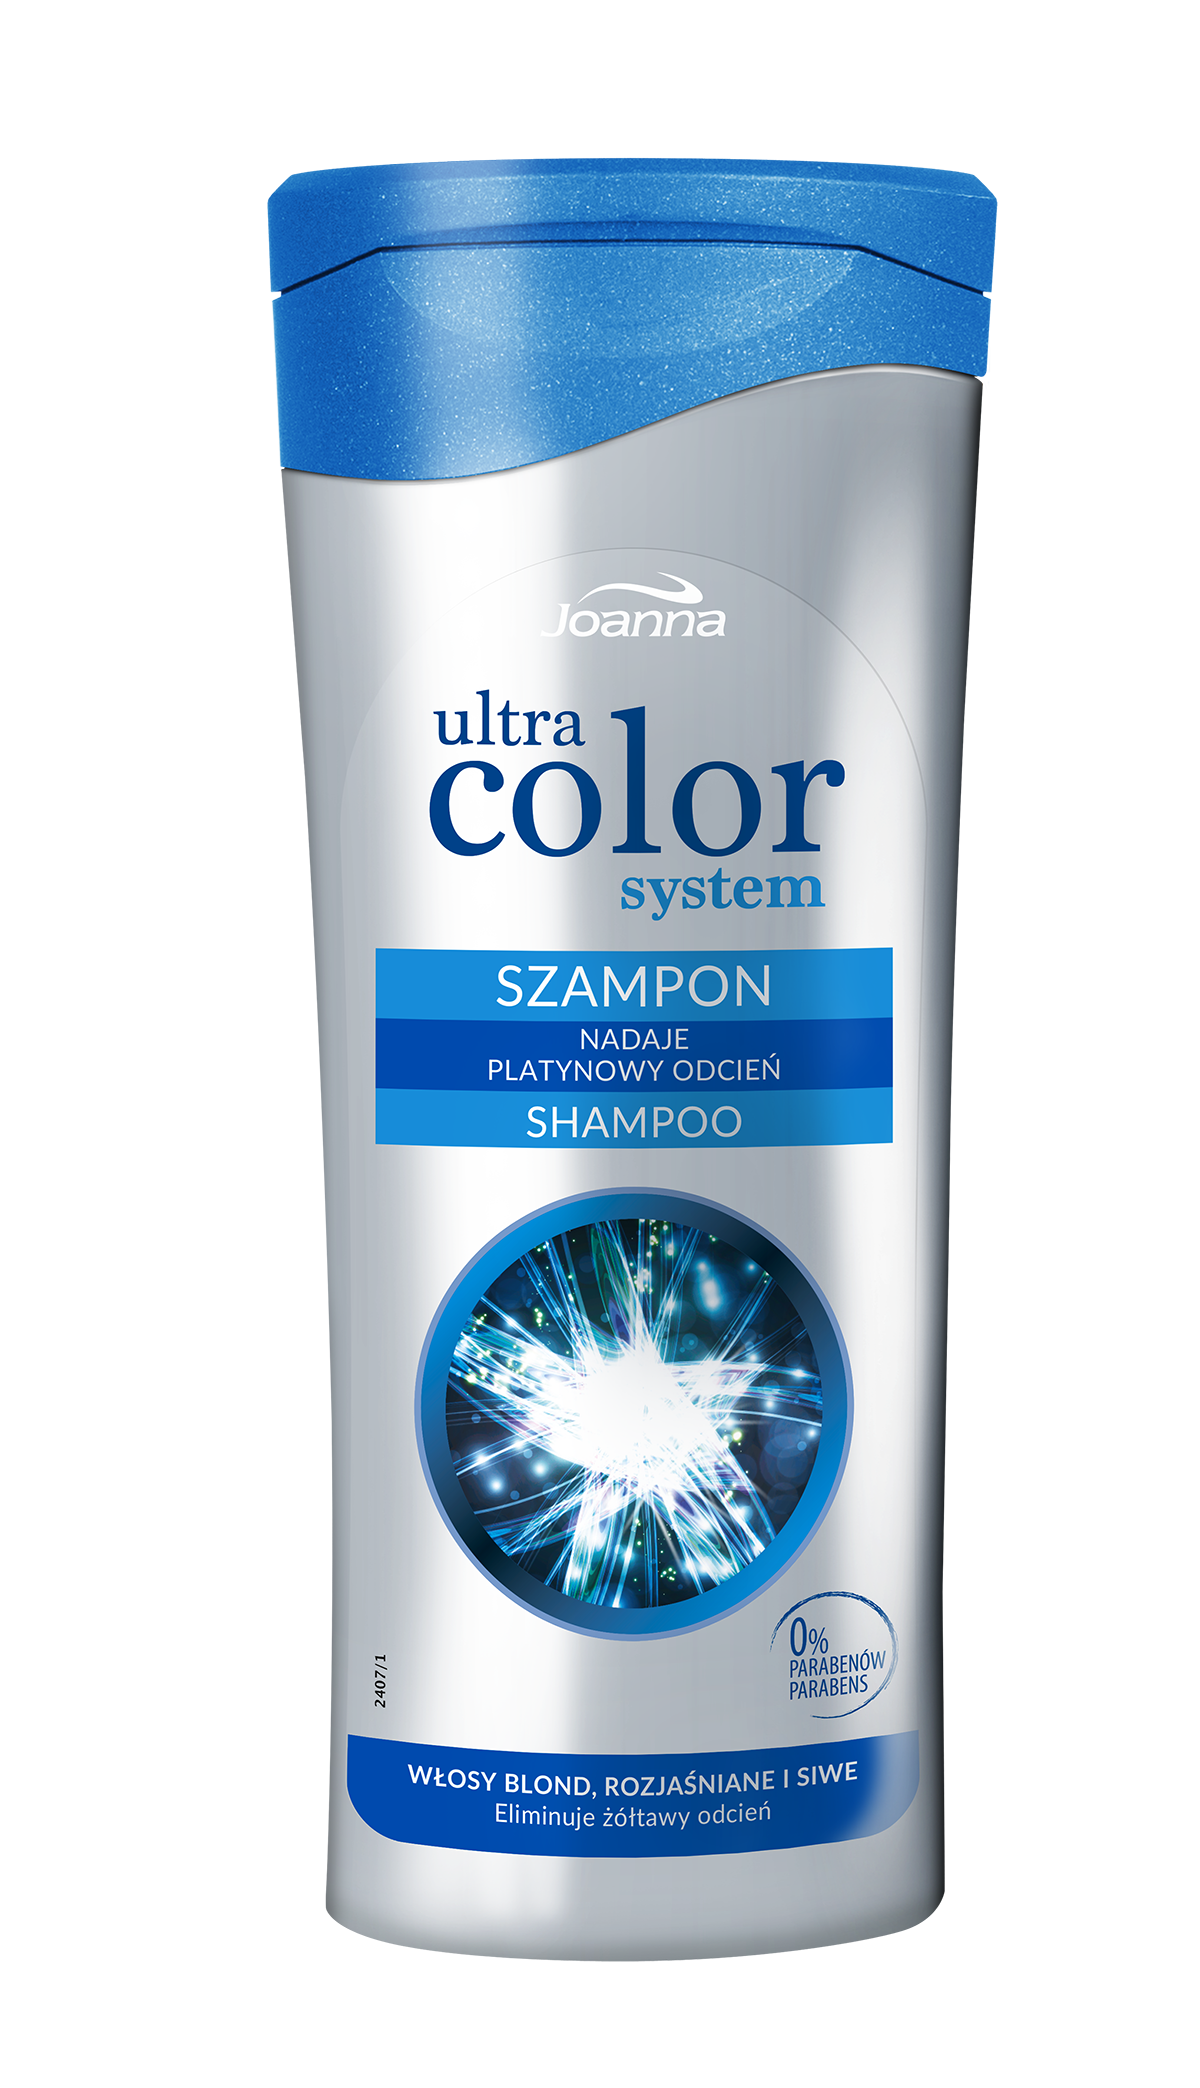 joanna ultra color system szampon niebieski test